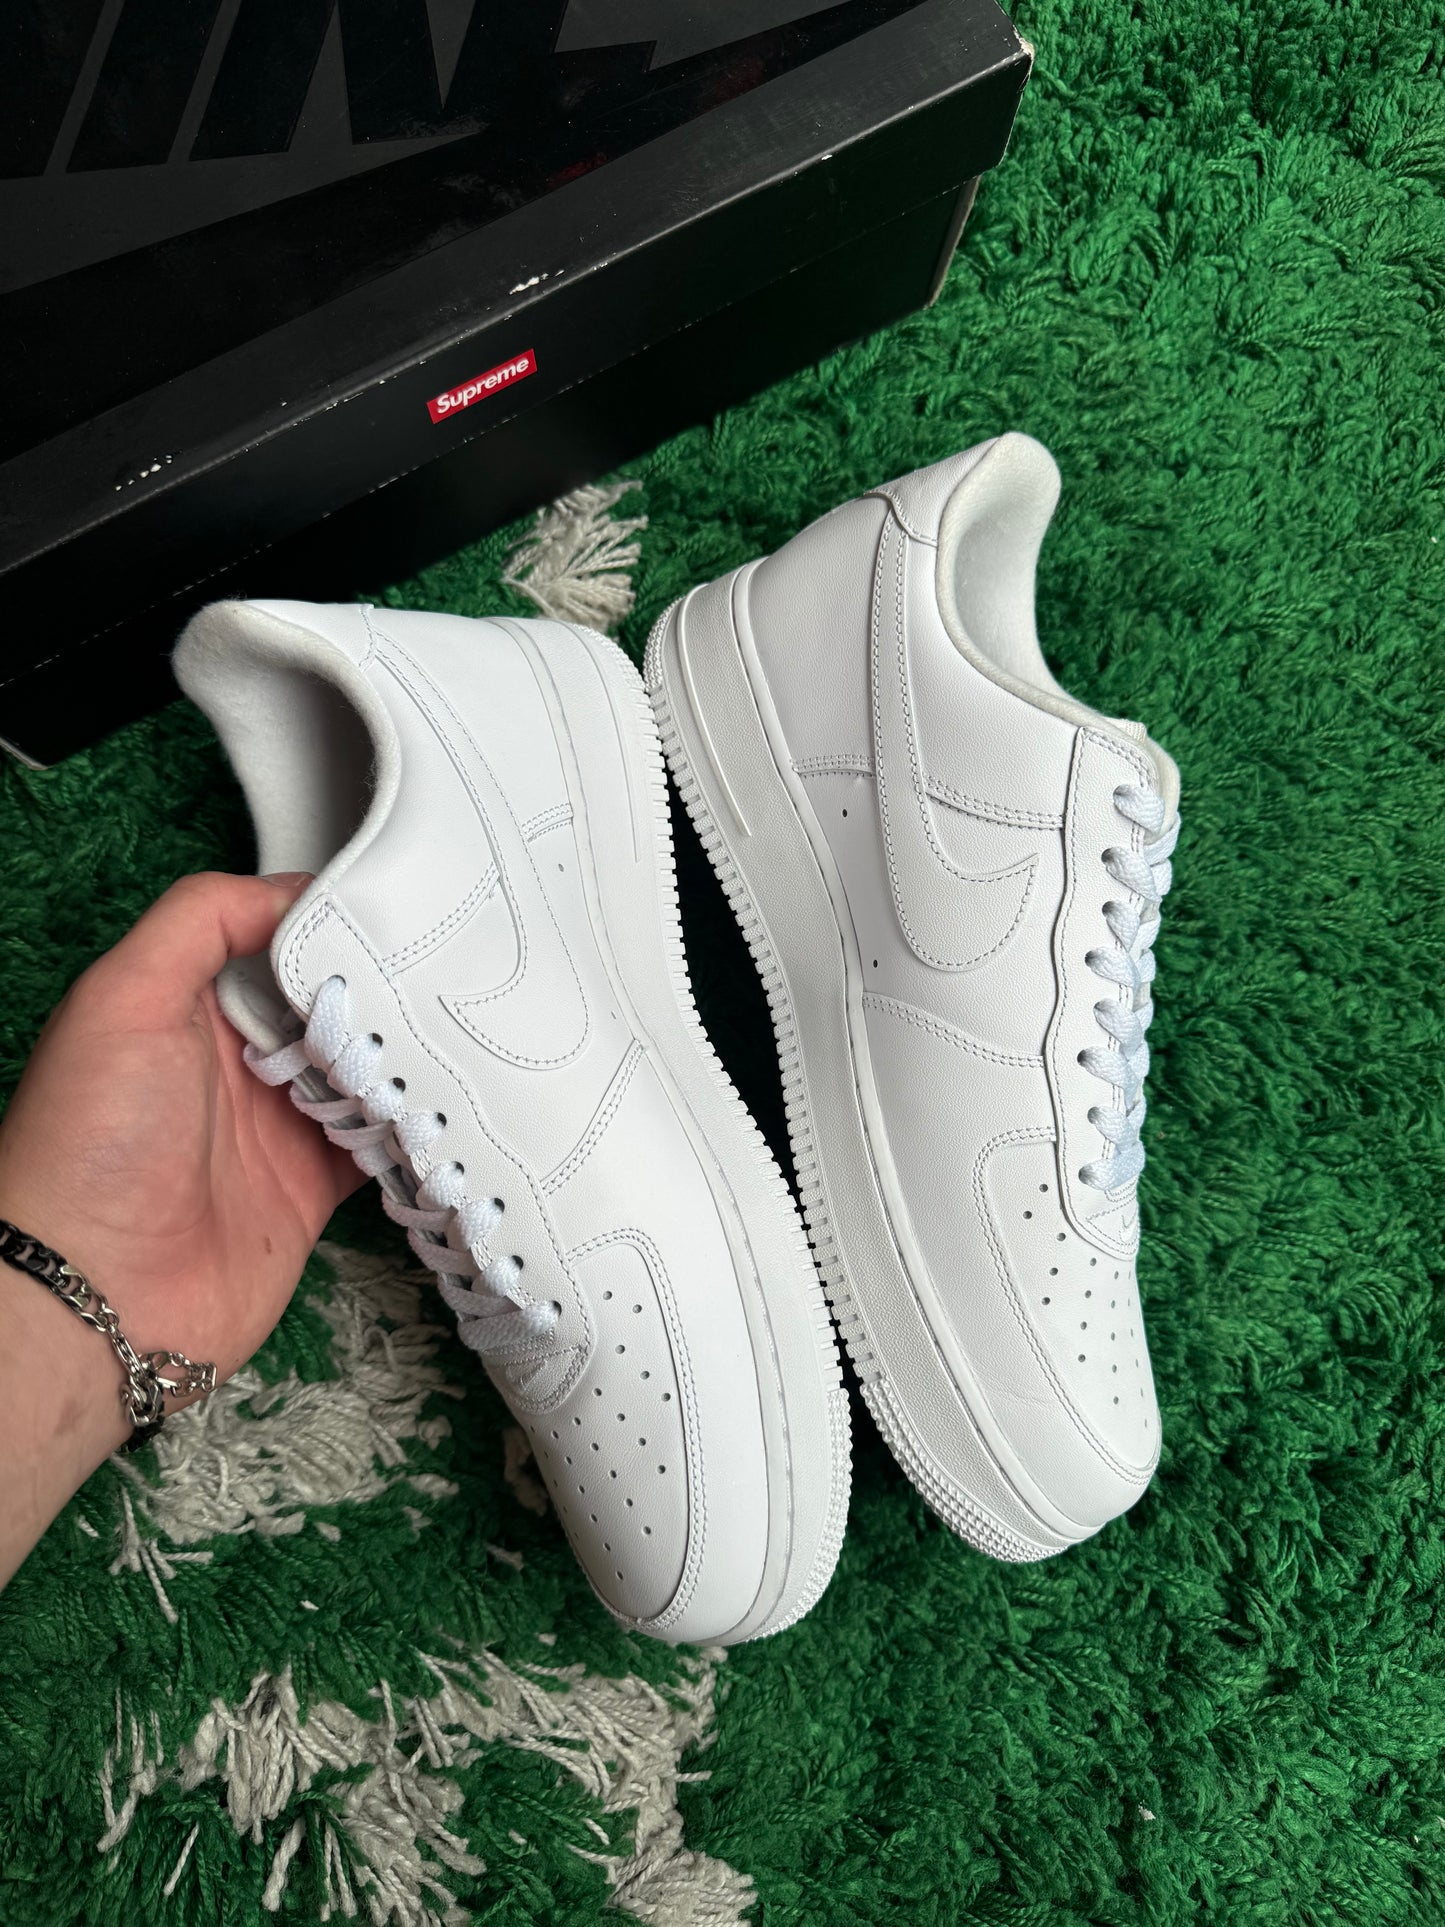 Nike AF1 Low Supreme “White”